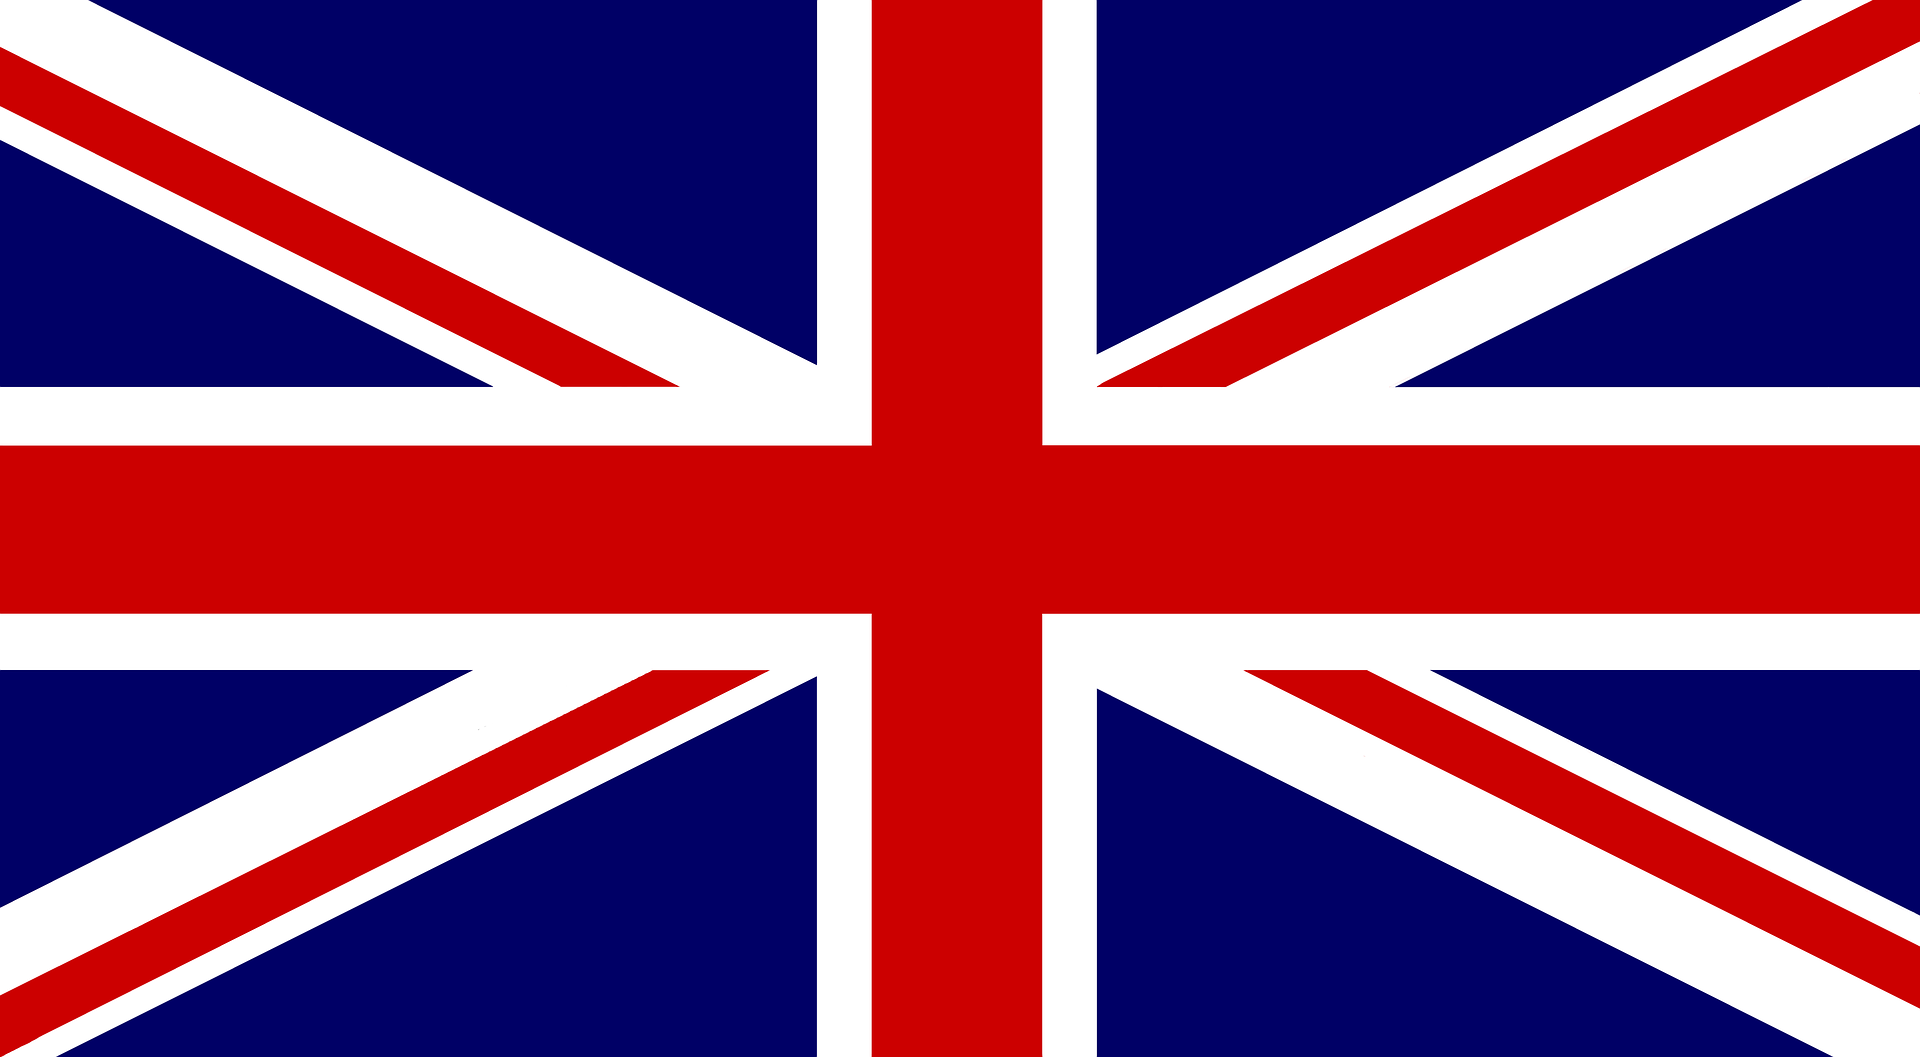 large-image-of-the-flag-of-the-united-kingdom